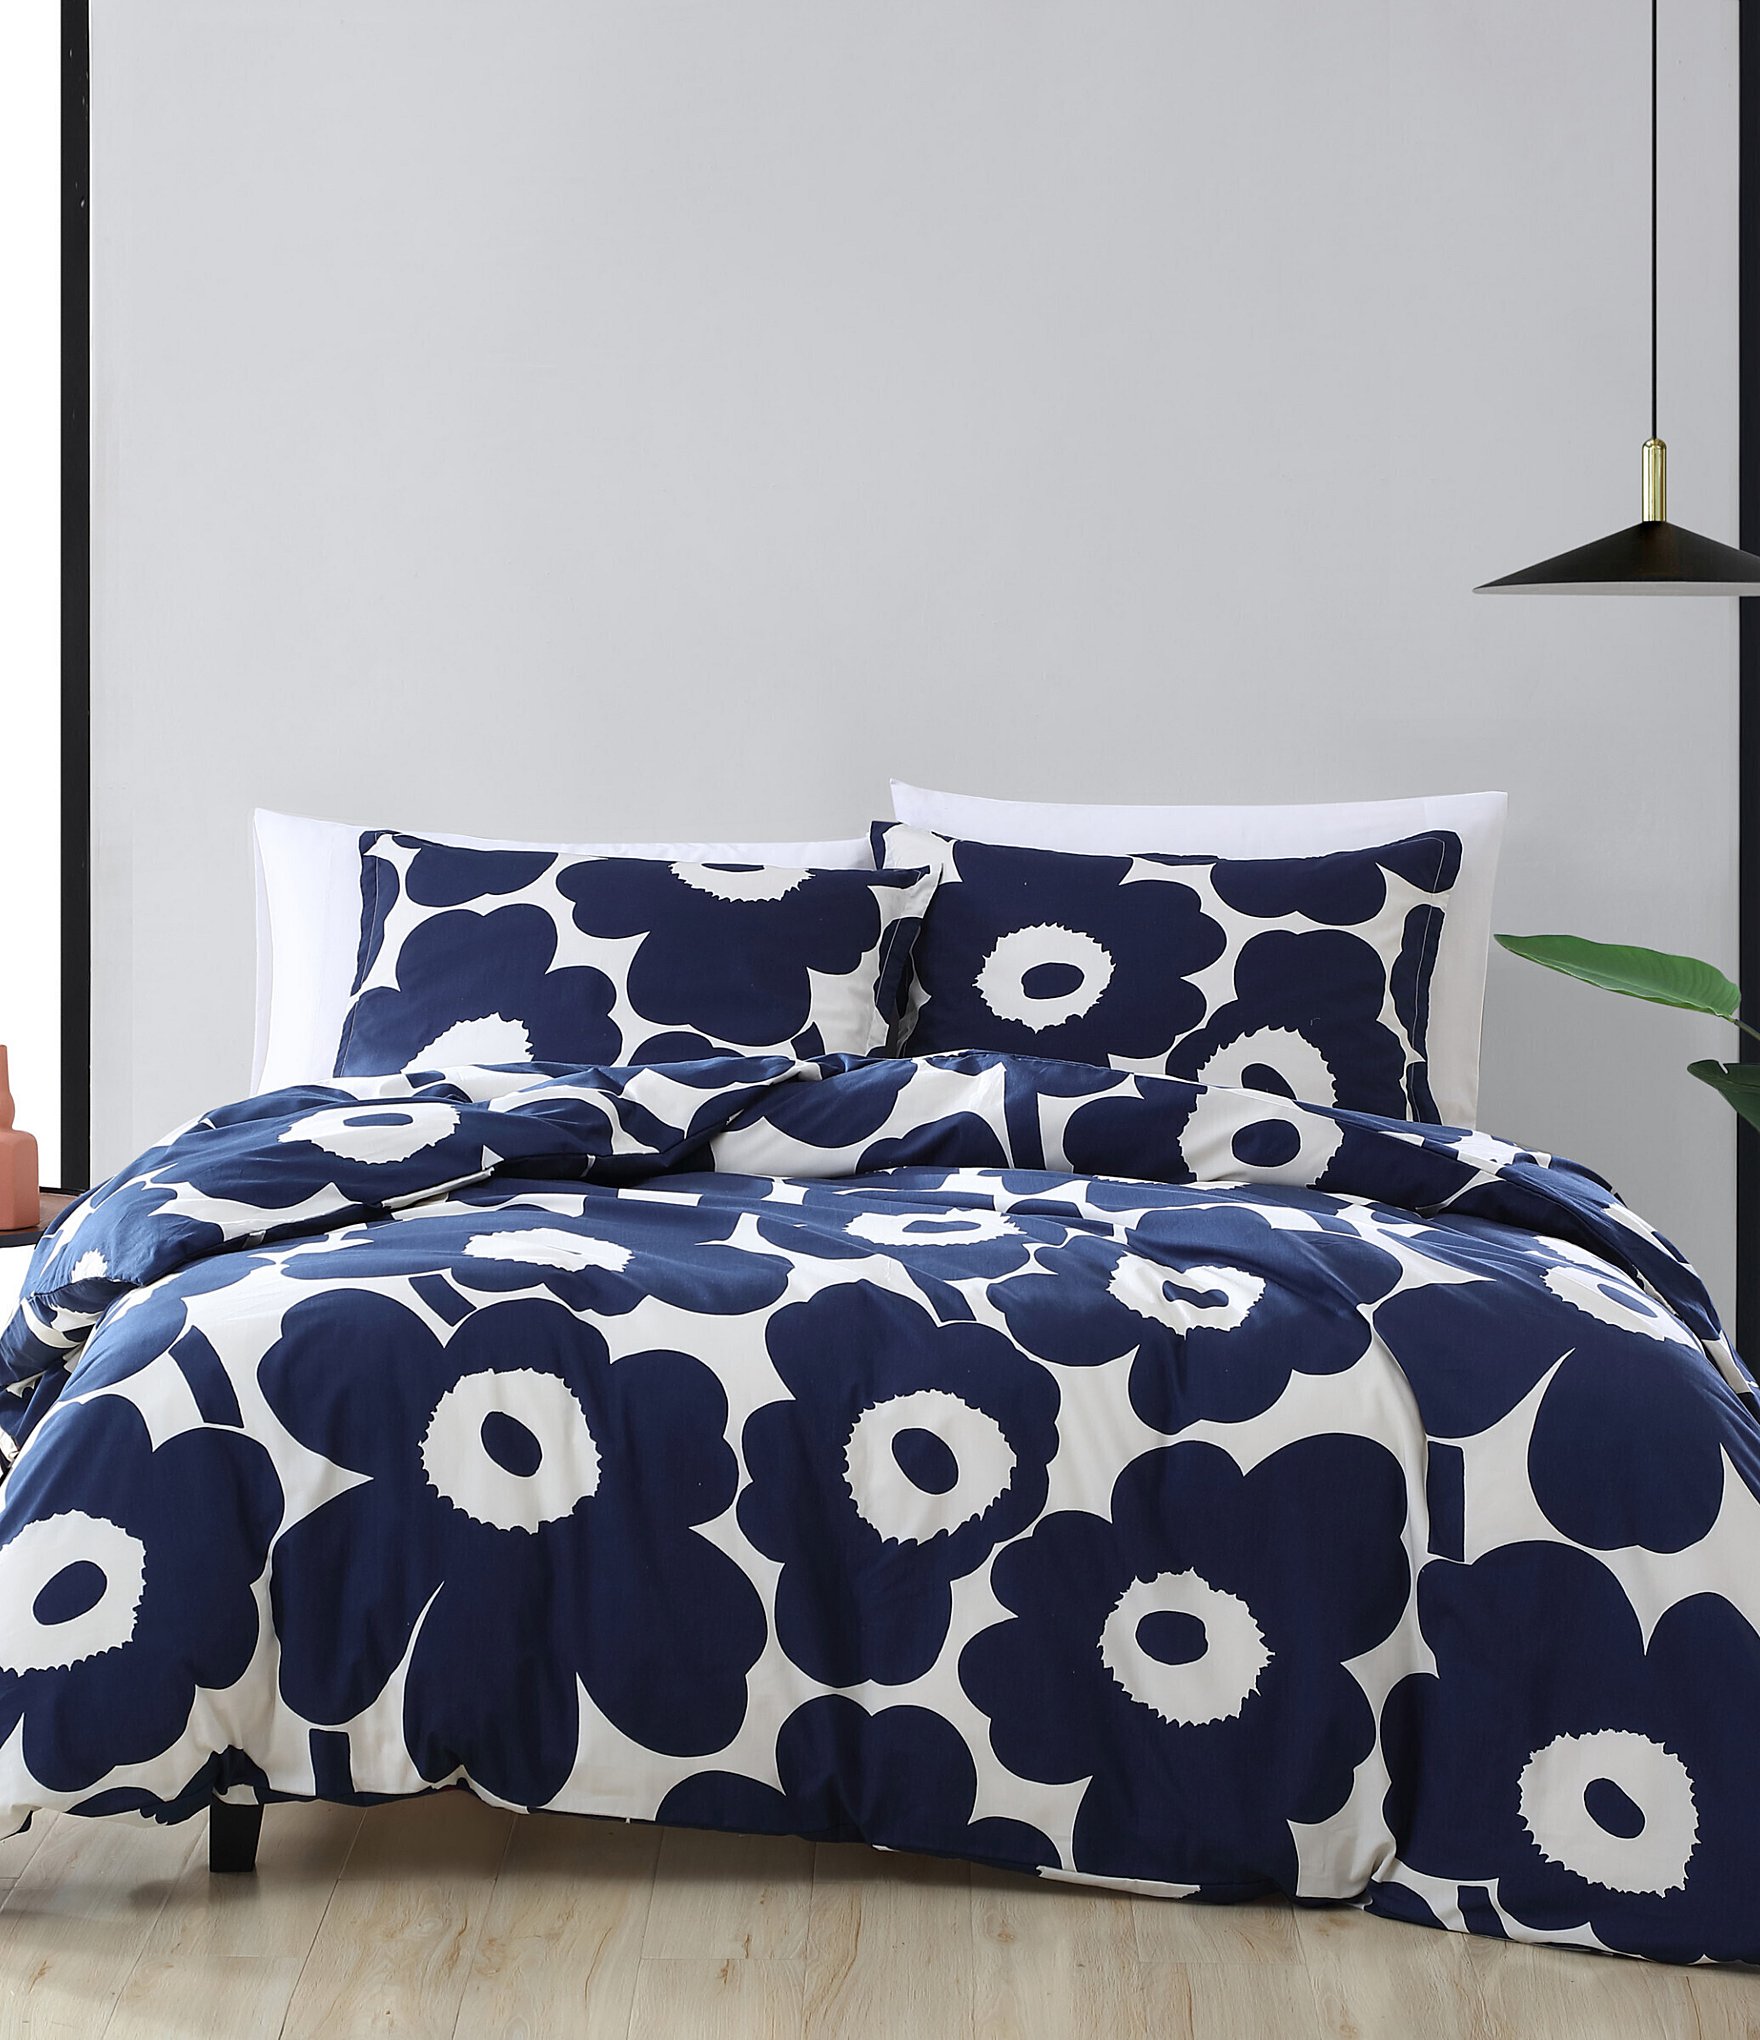 Marimekko Blue Bedding Collections, Comforters, Quilts, Duvets & Sheets |  Dillard's